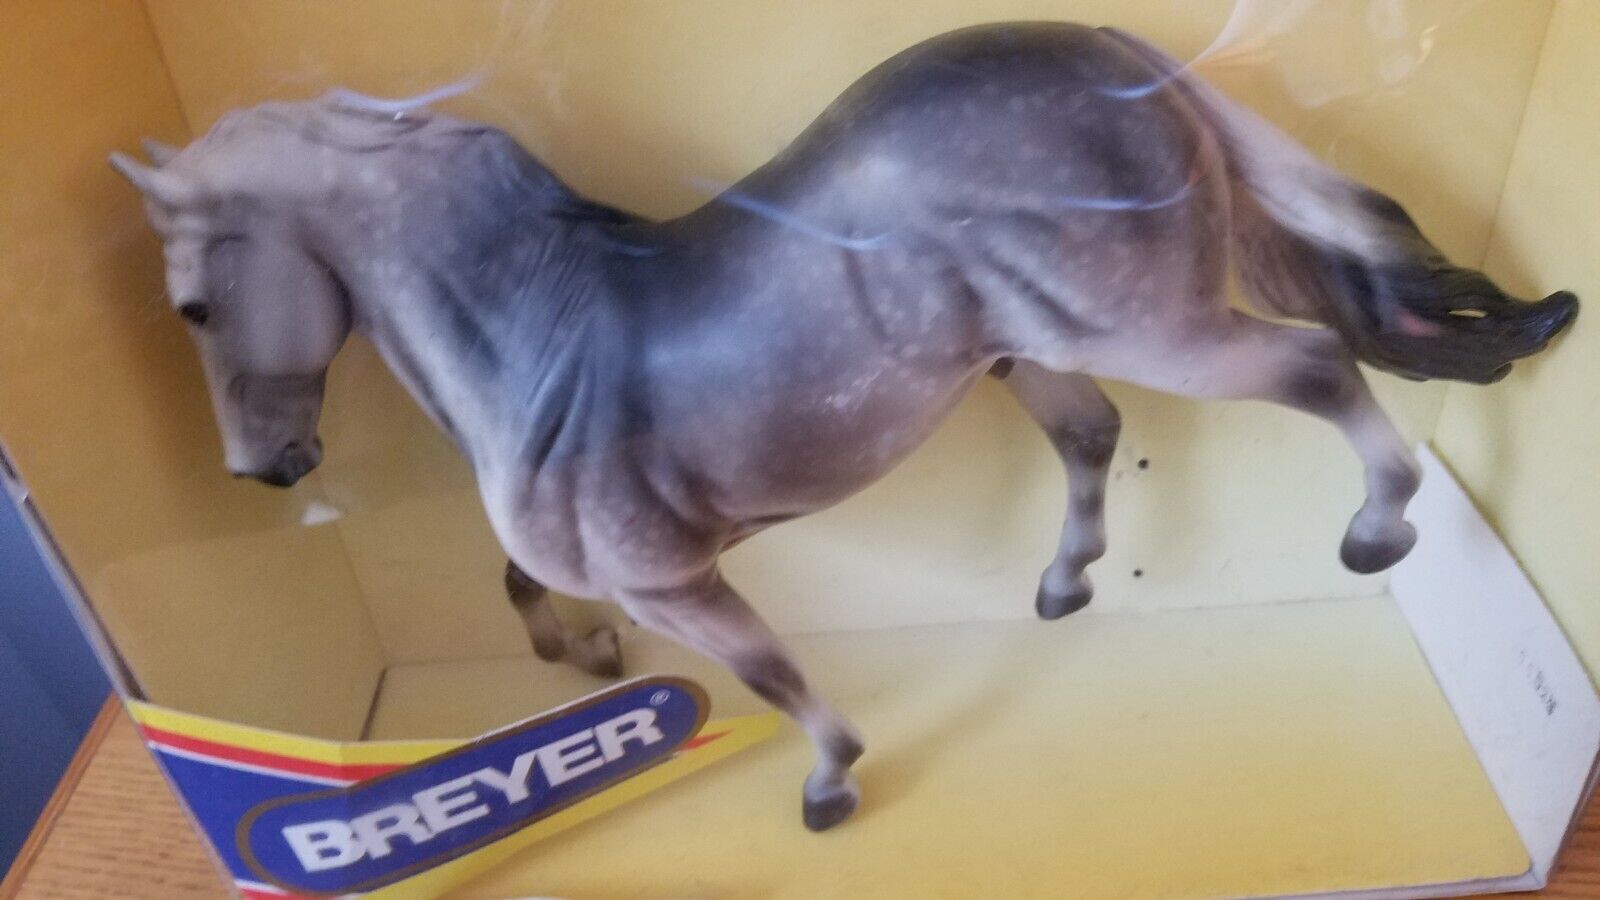  Breyer Peruvian Paso Horse, No. 576. New In Box. Very Light Damage to Box.